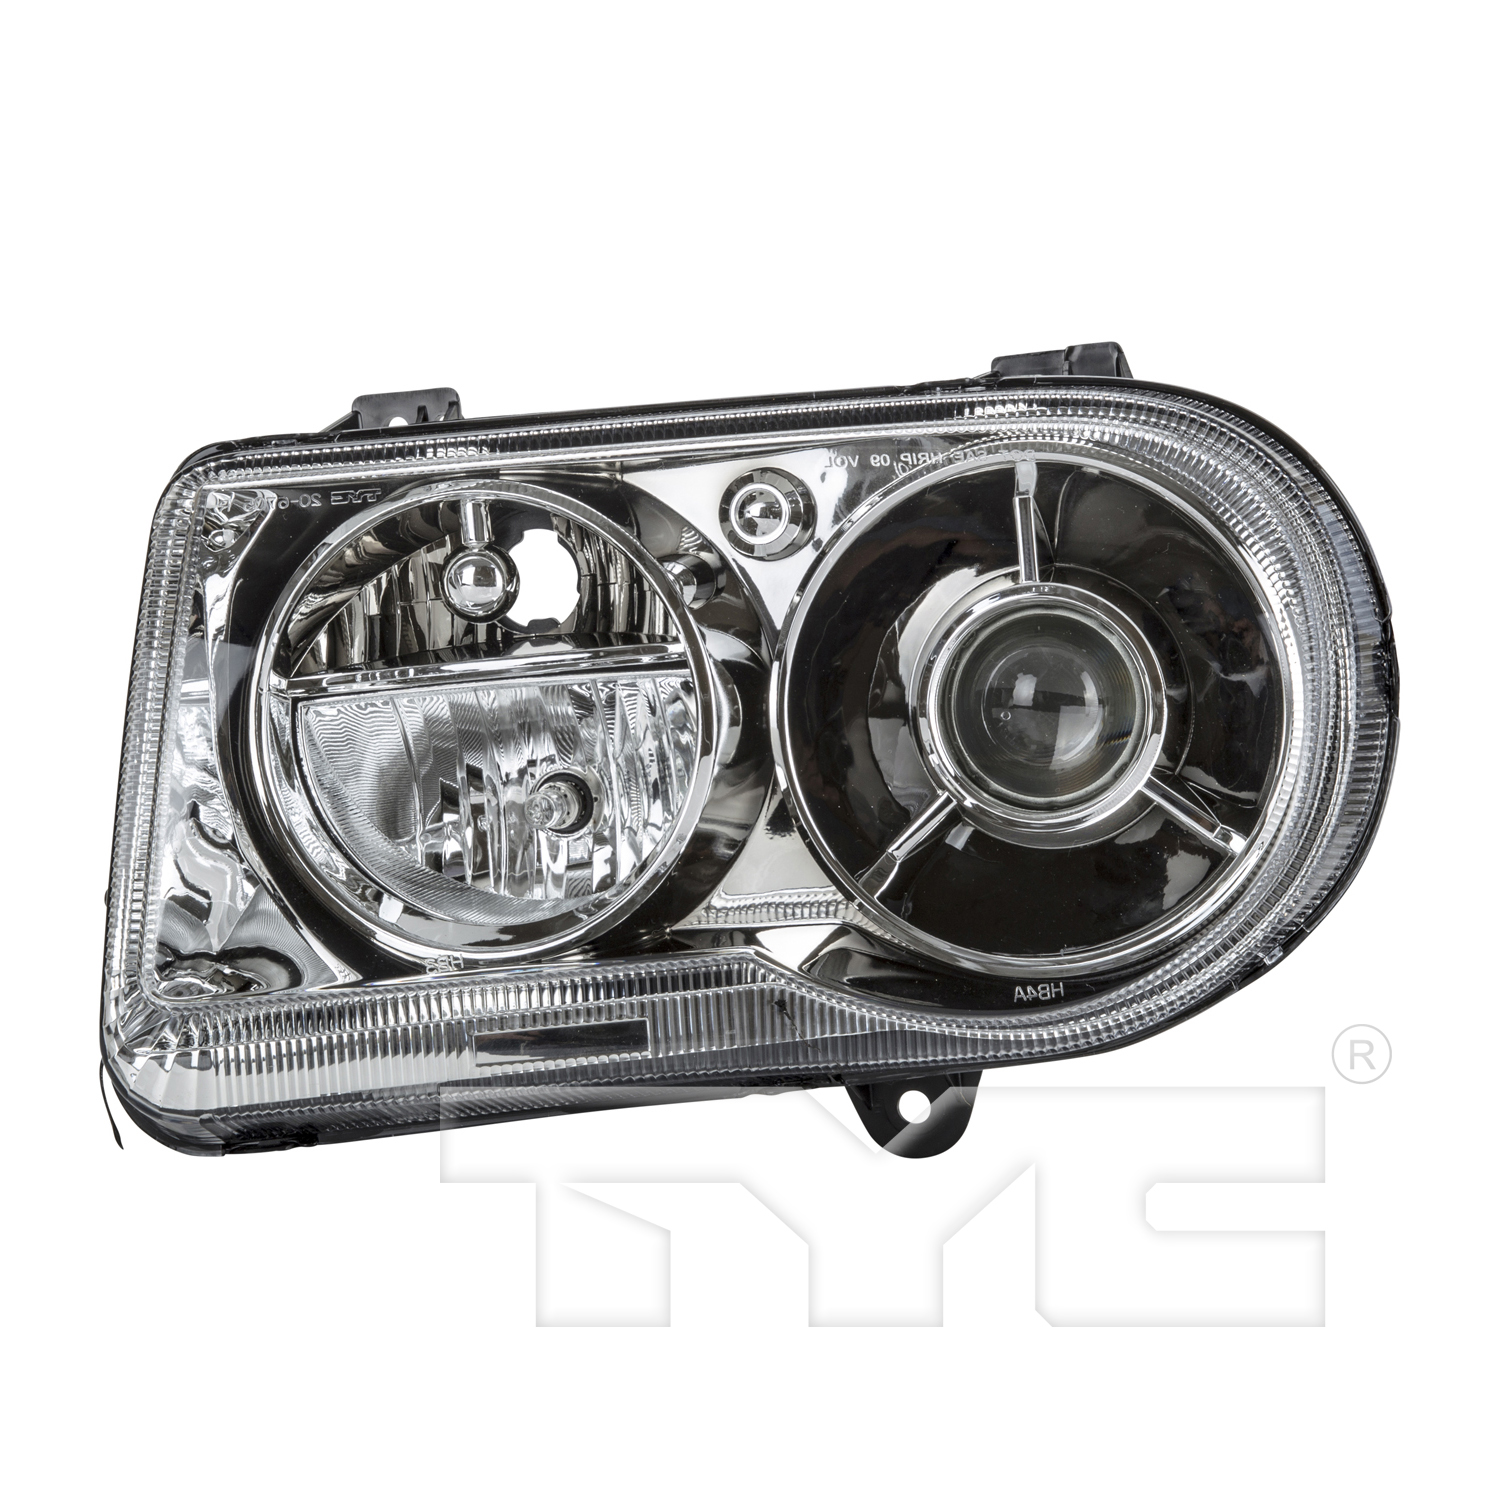 Aftermarket HEADLIGHTS for CHRYSLER - 300, 300,05-10,LT Headlamp assy composite